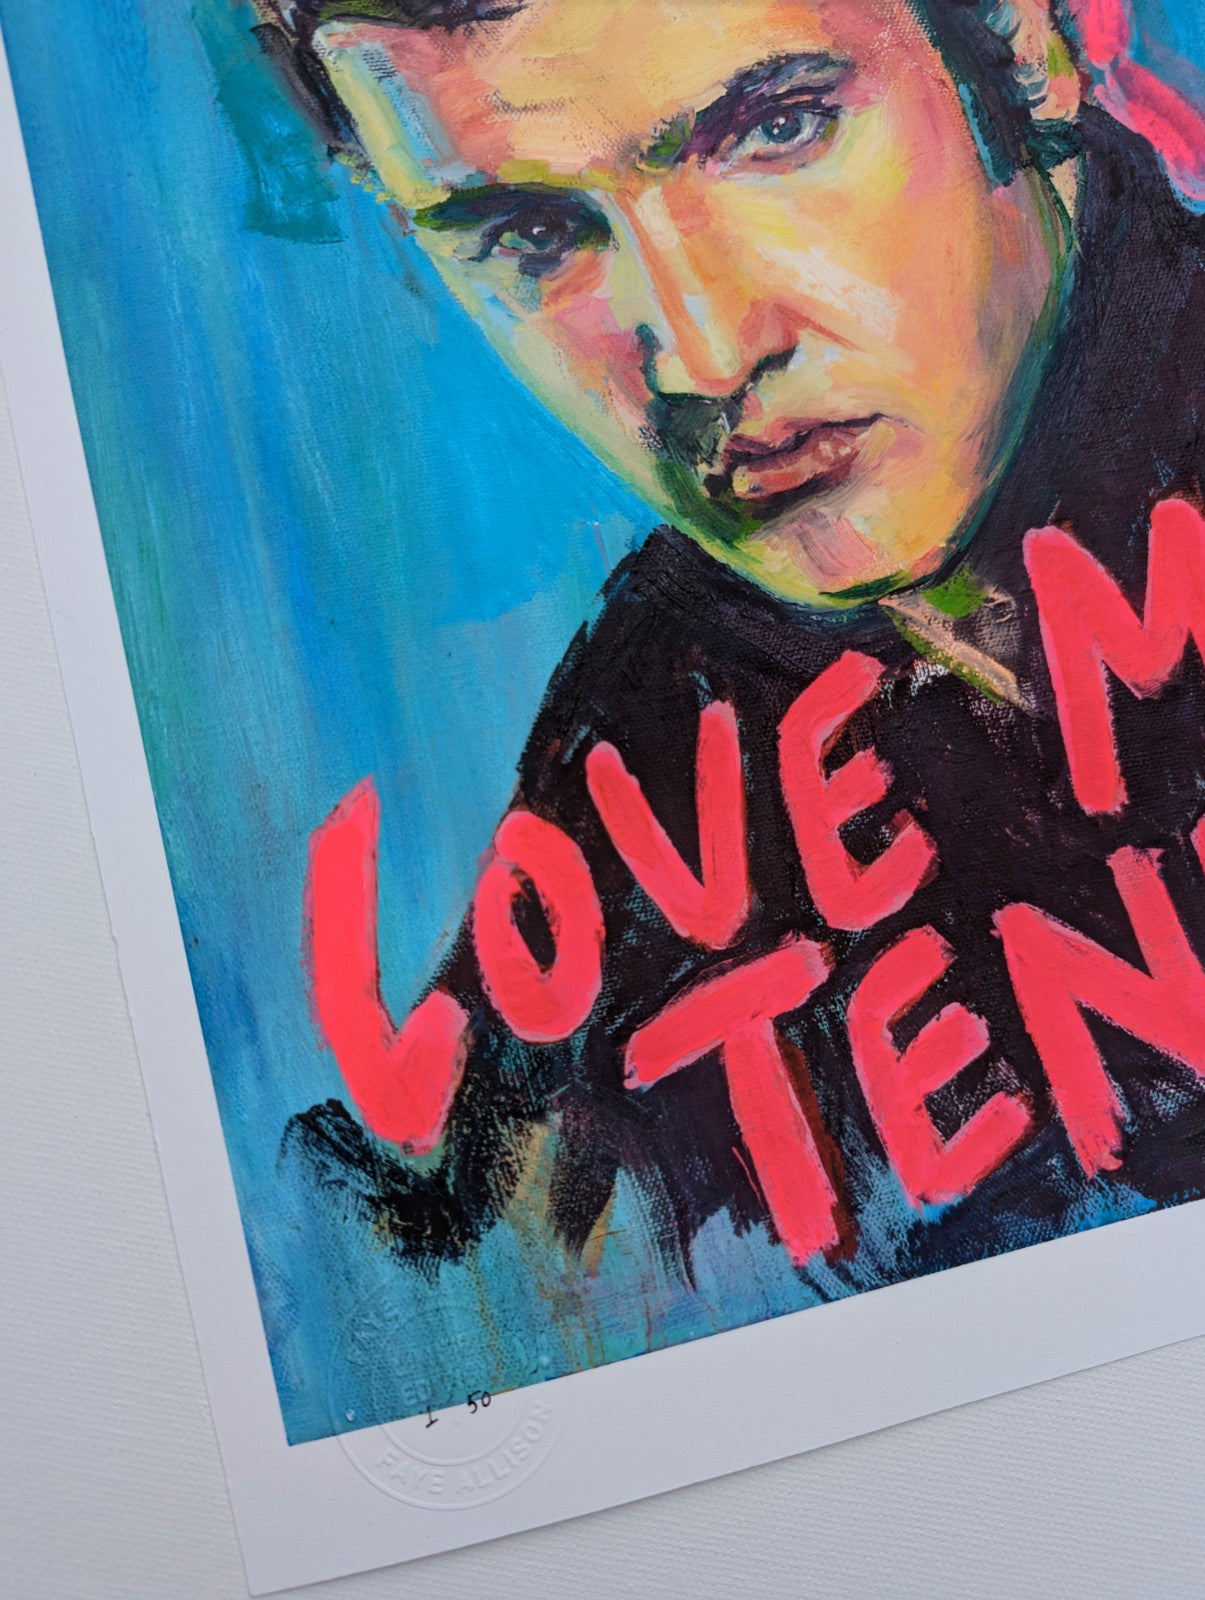 'Love Me Tender' Elvis DELUXE HAND - EMBELLISHED LIMITED EDITION PRINT